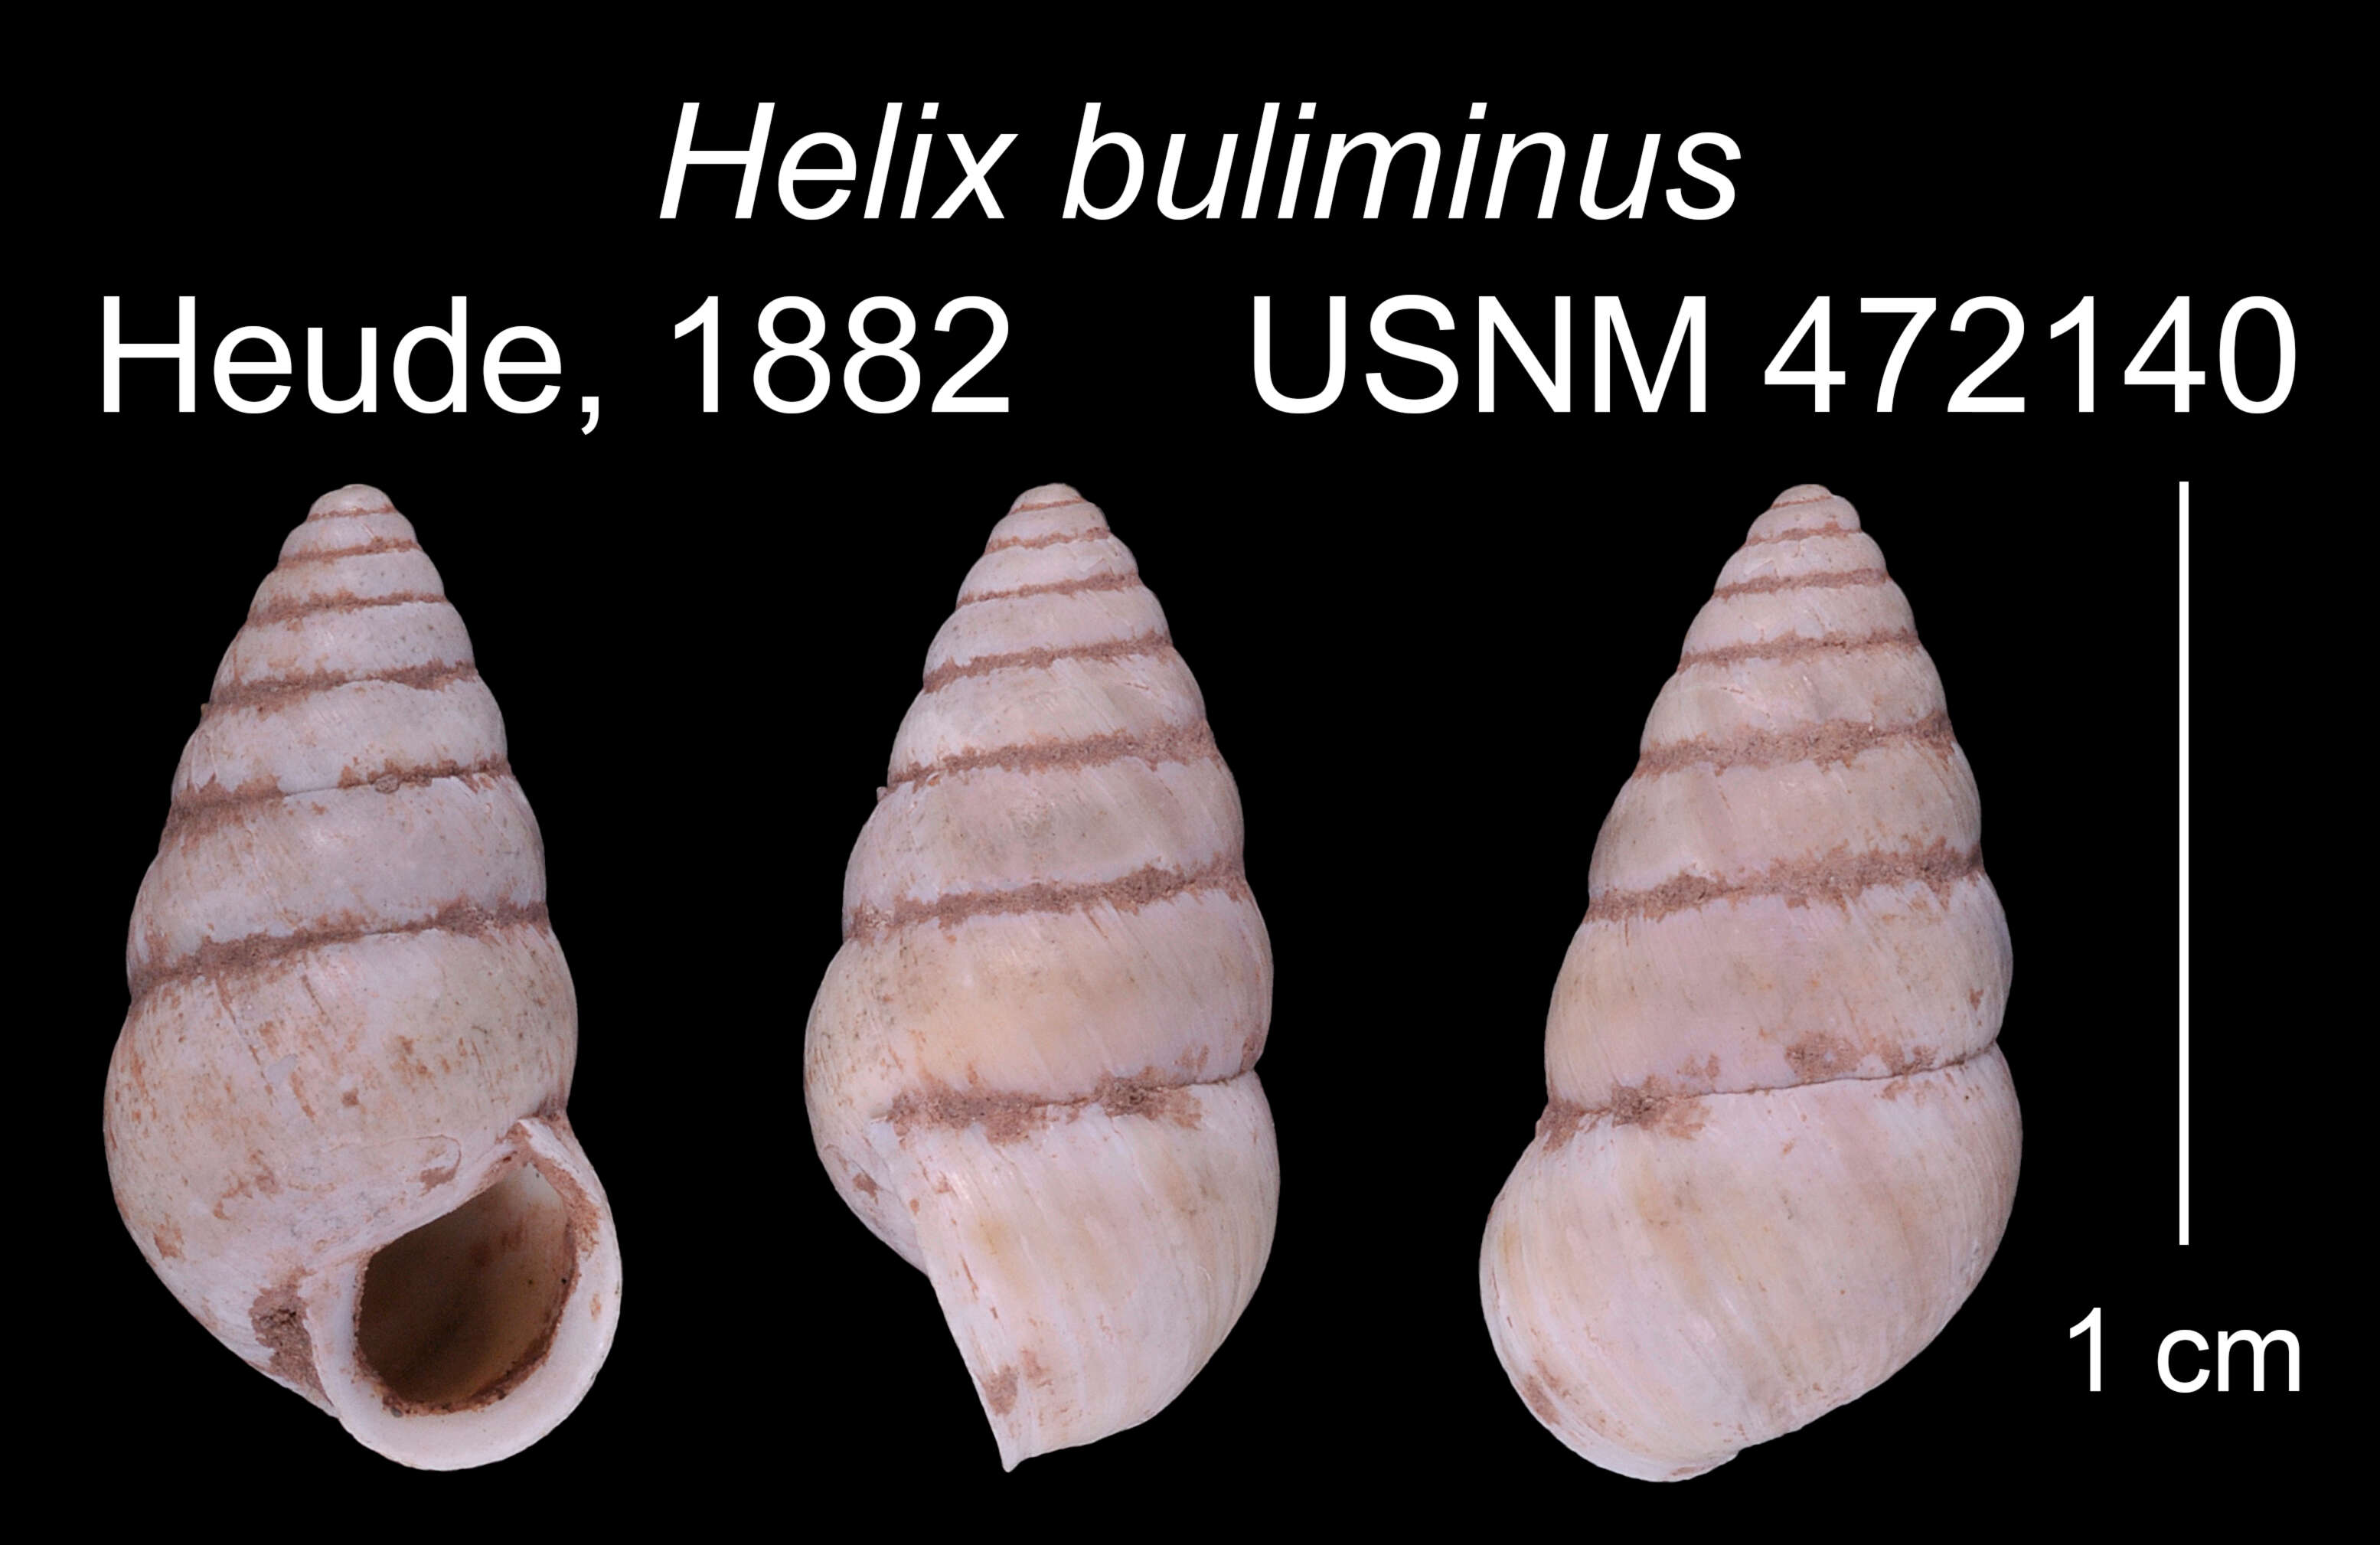 Image of Buliminopsis buliminus (Heude 1882)